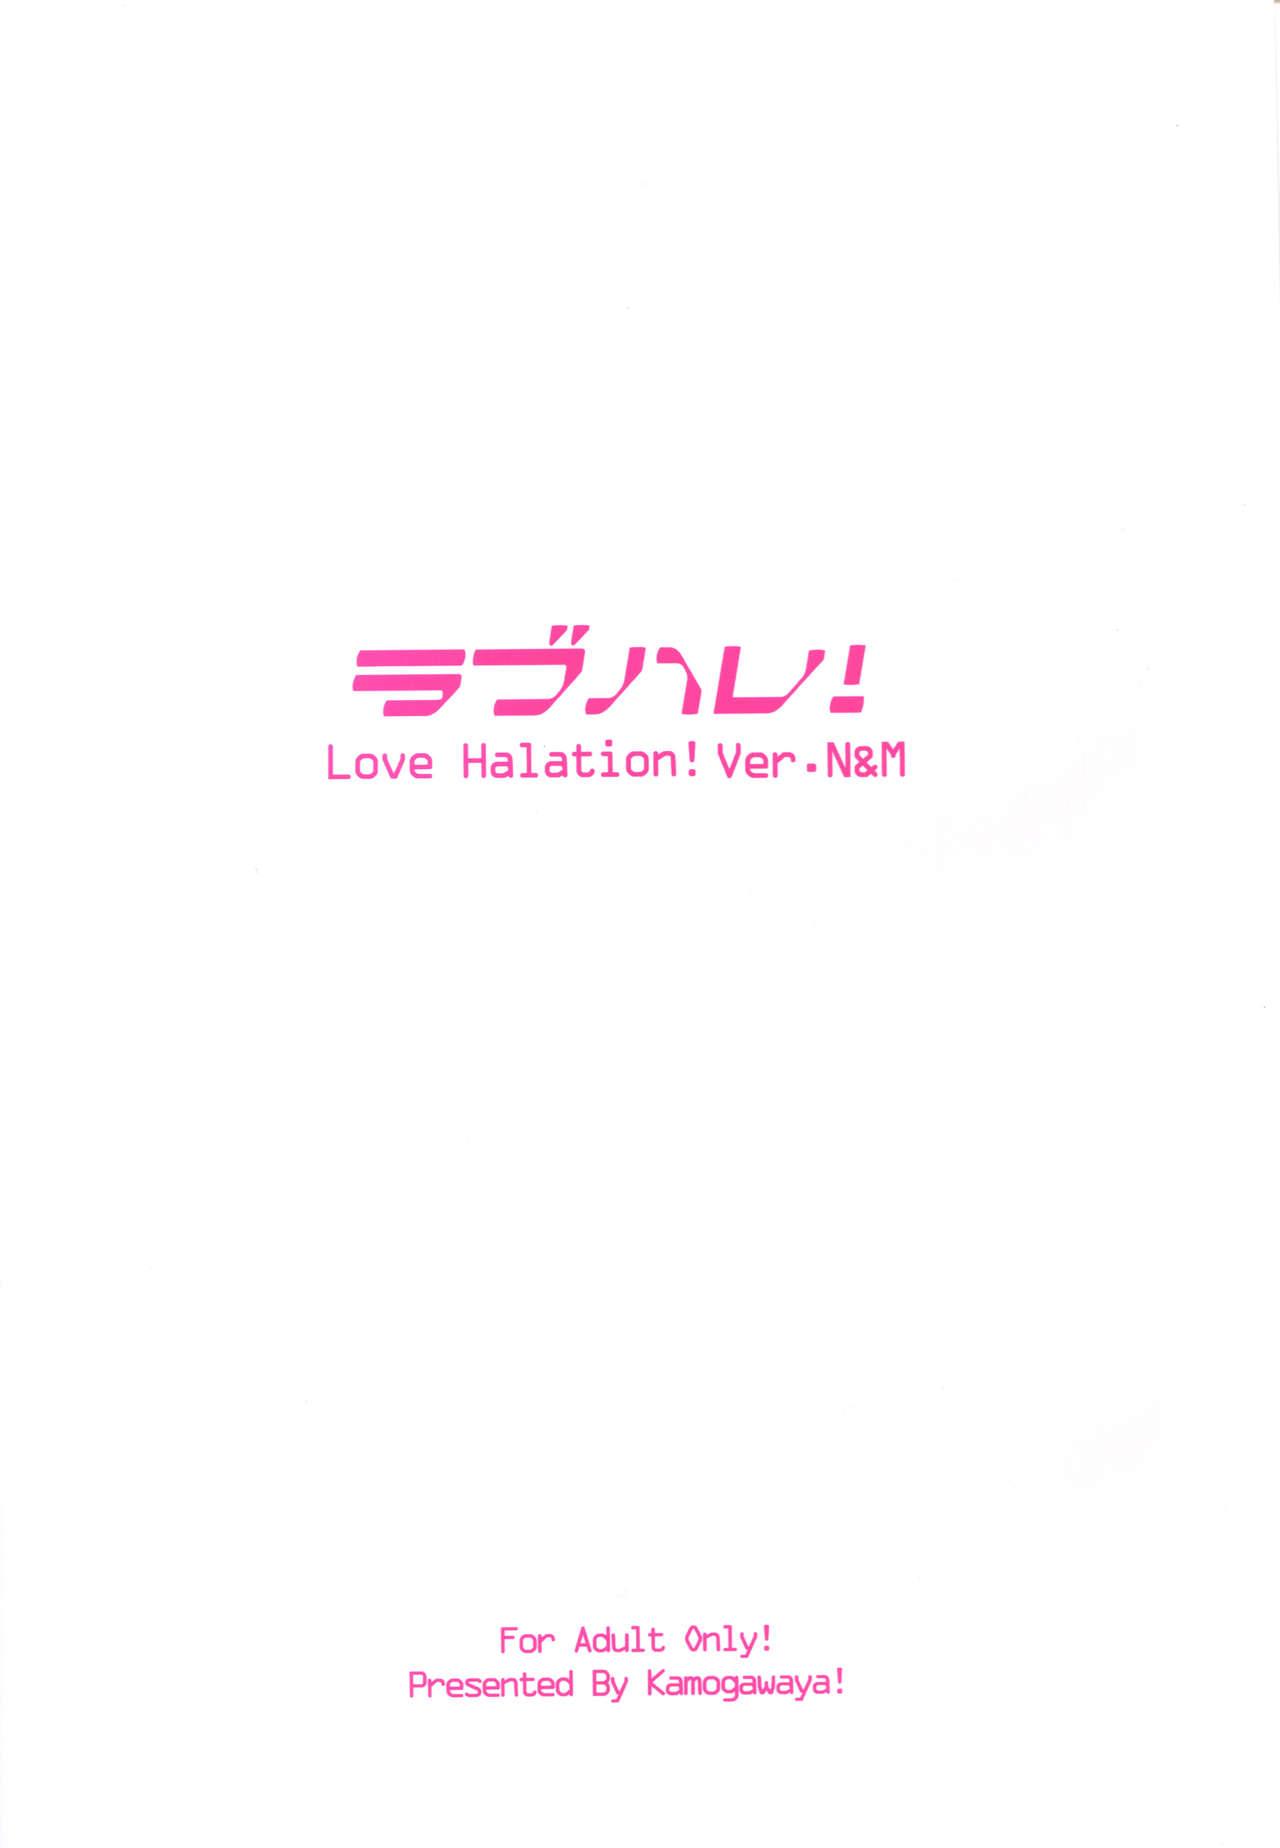 LoveHala! Love Halation! Ver.N&M 2